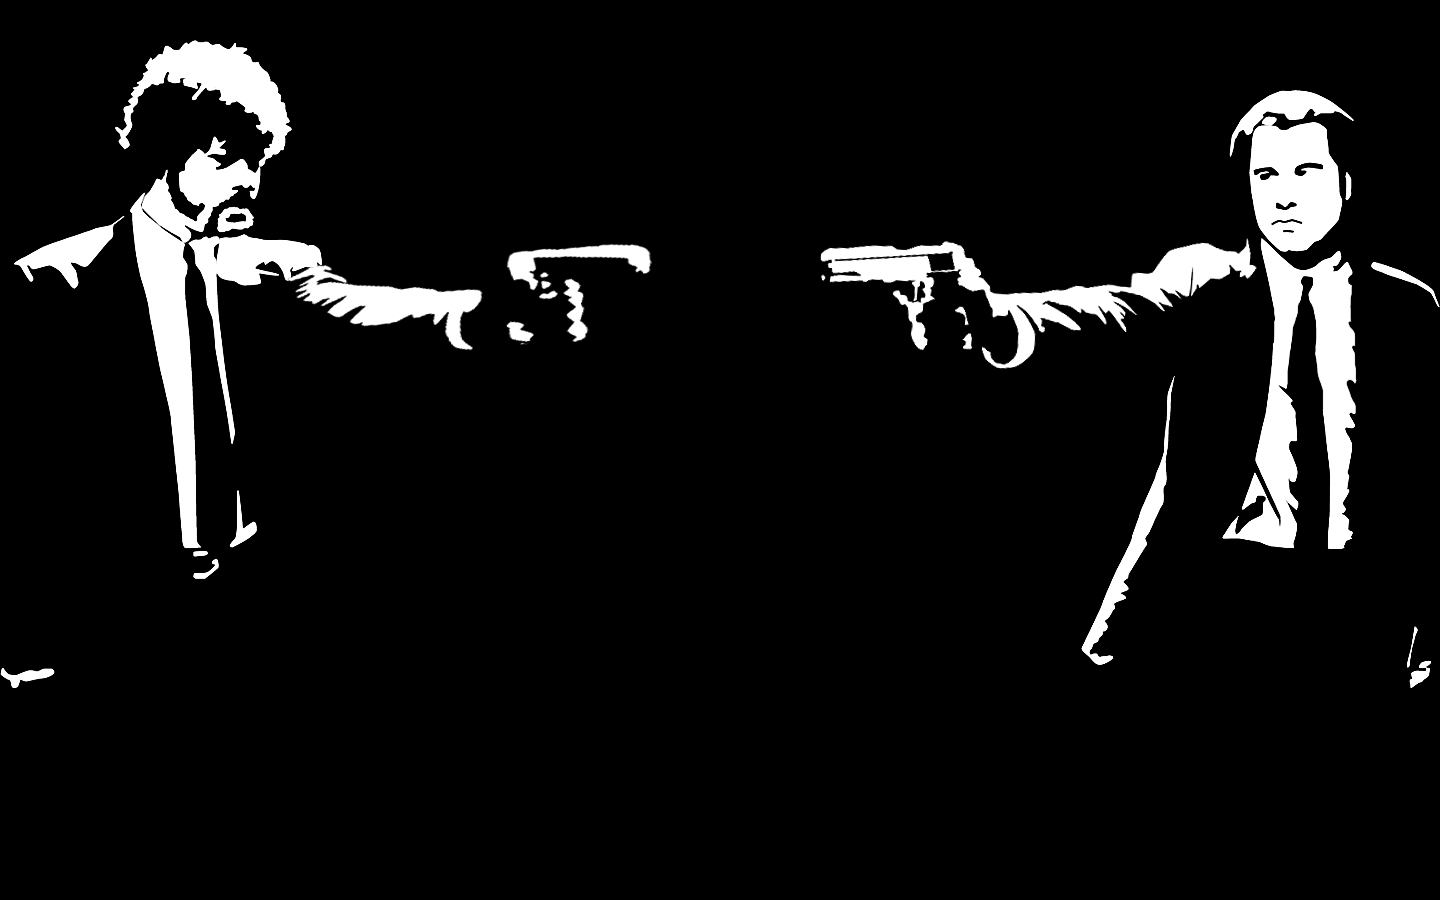 General 1440x900 movies monochrome minimalism Pulp Fiction black background simple background weapon gun tie suits Quentin Tarantino